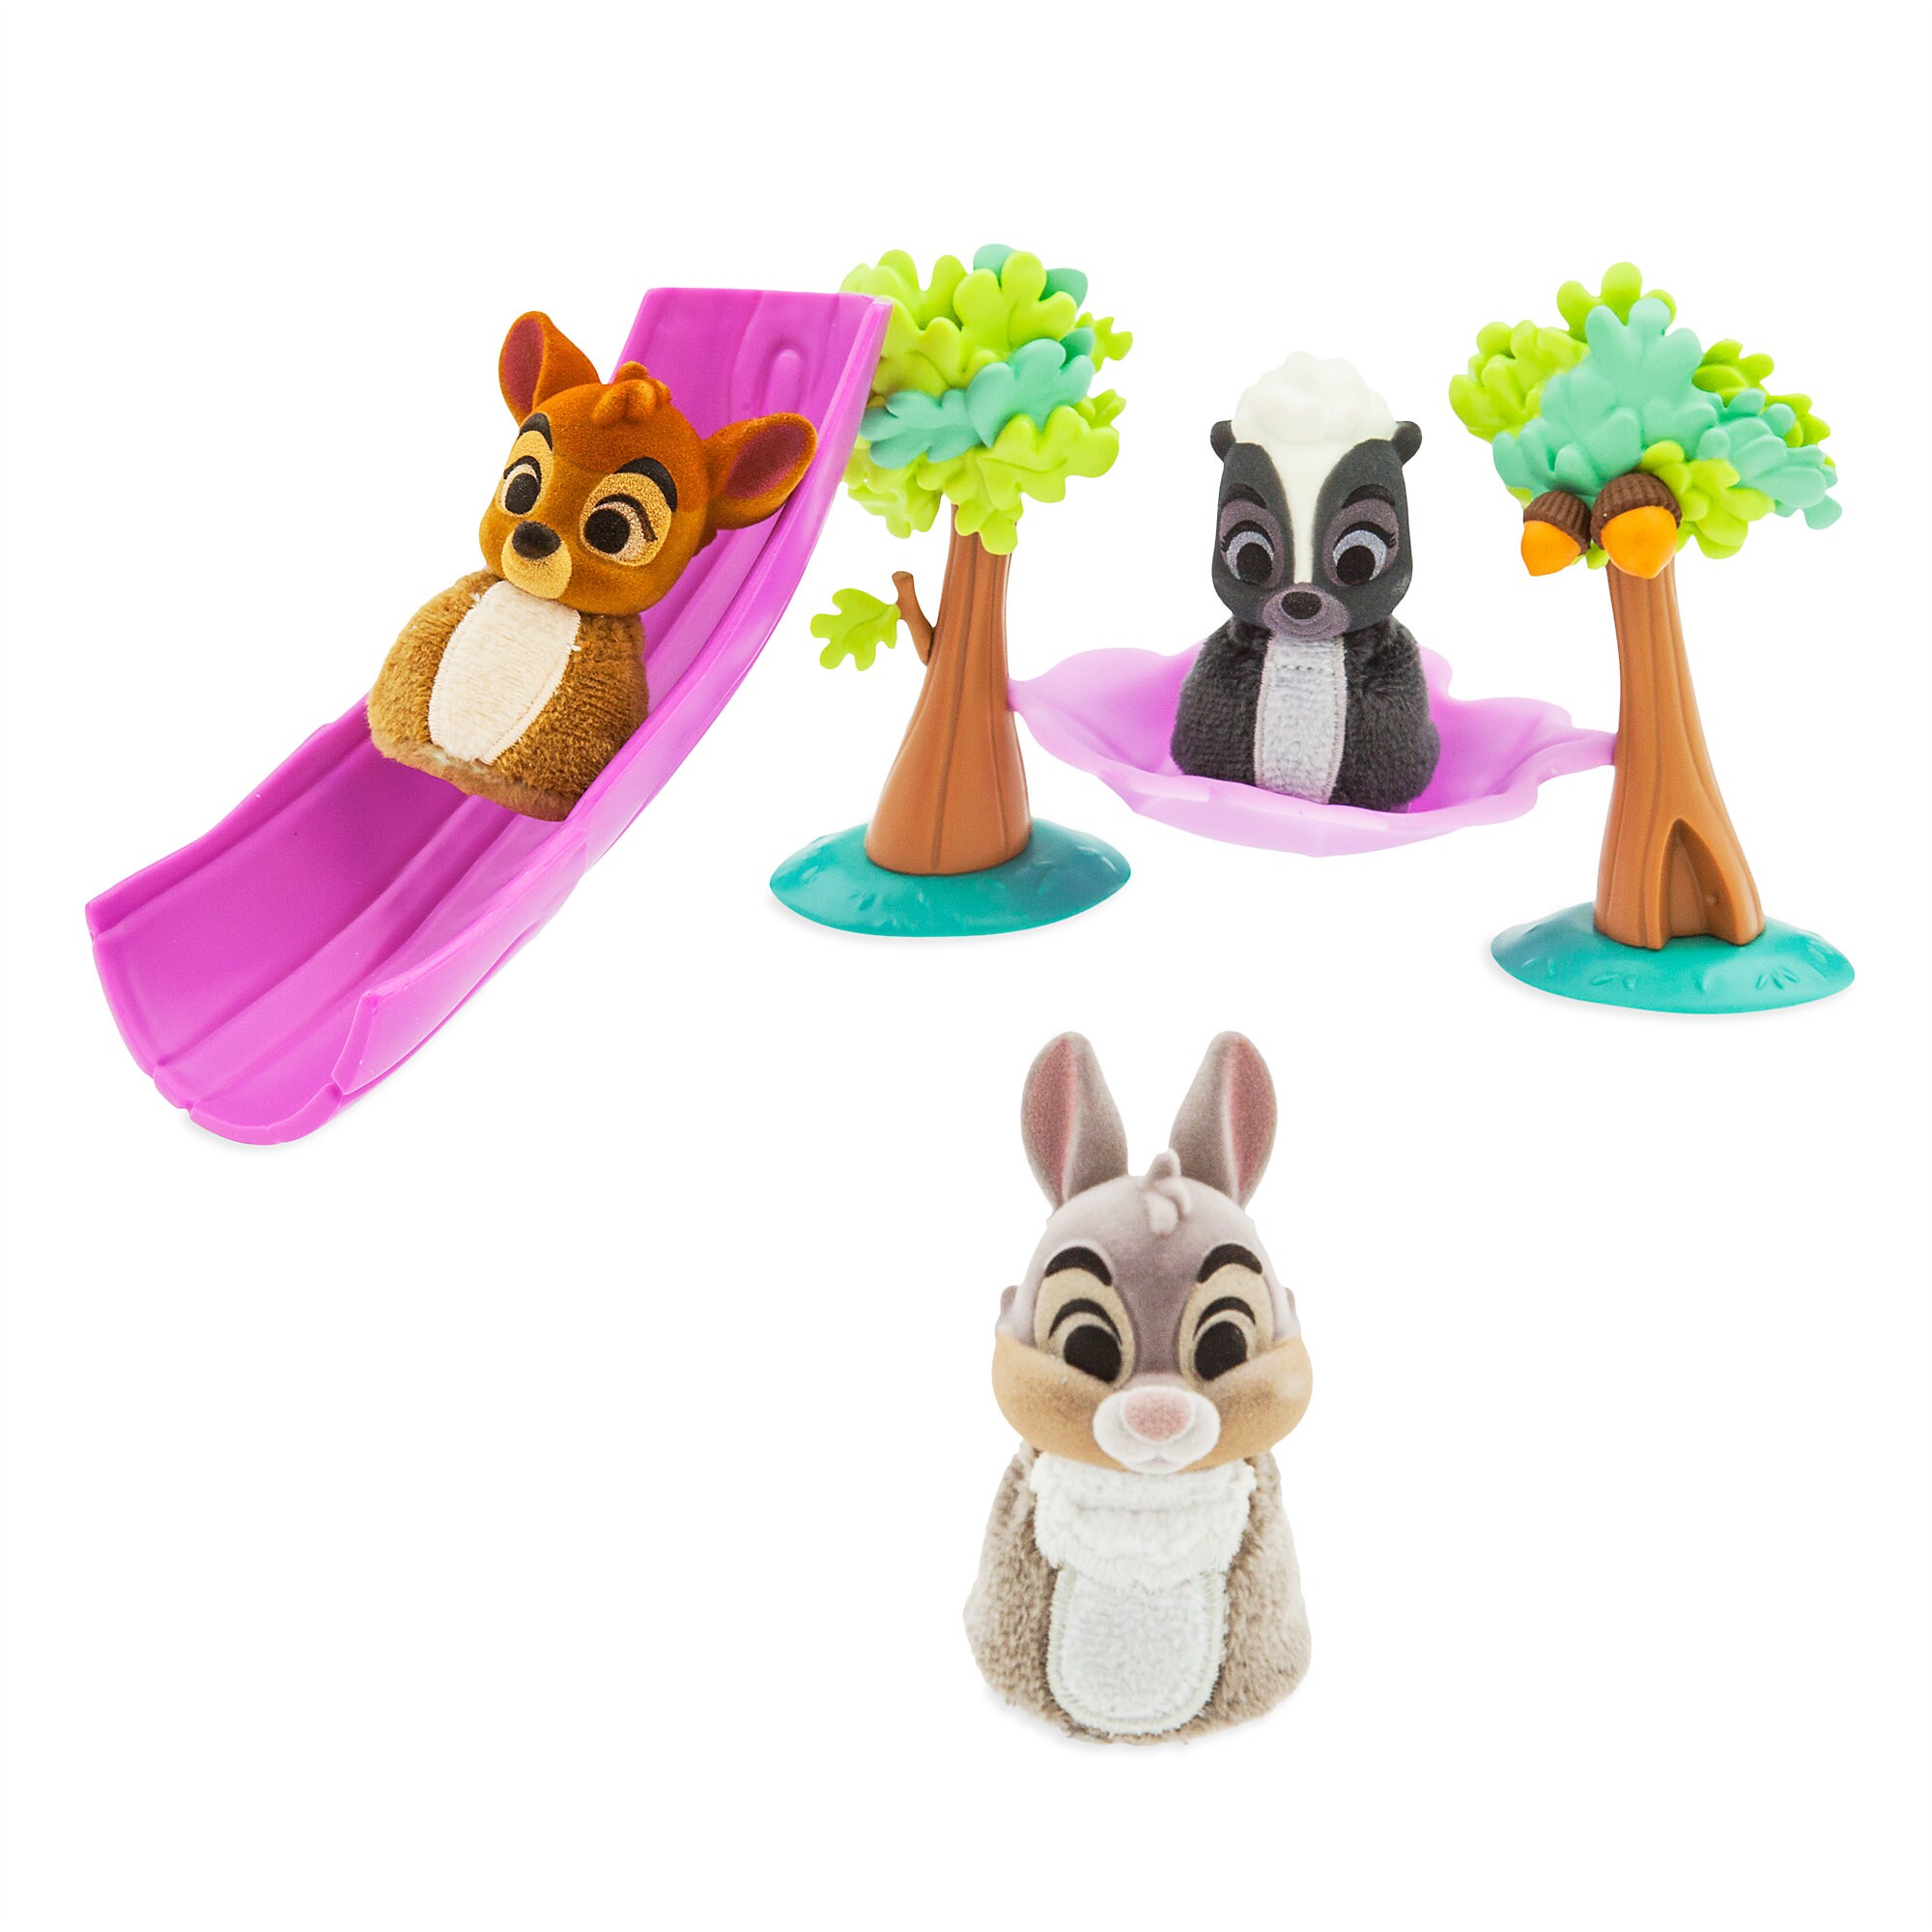 Bambi Play Set - Disney Furrytale friends